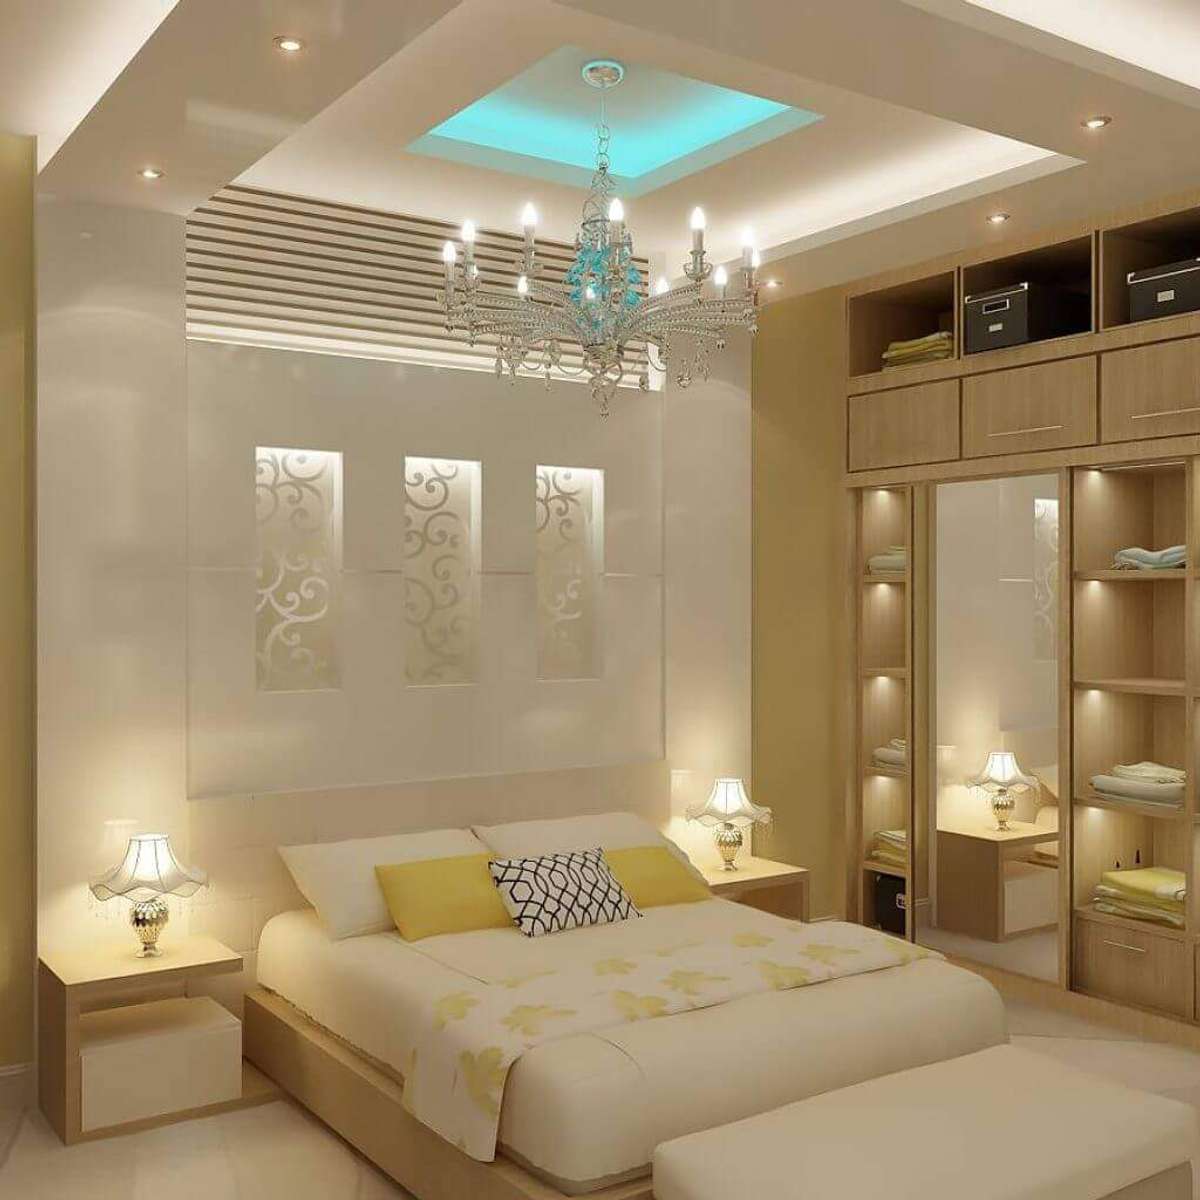 Ceiling, Furniture, Bedroom, Lighting, Storage Designs by Carpenter up bala carpenter, Kannur | Kolo